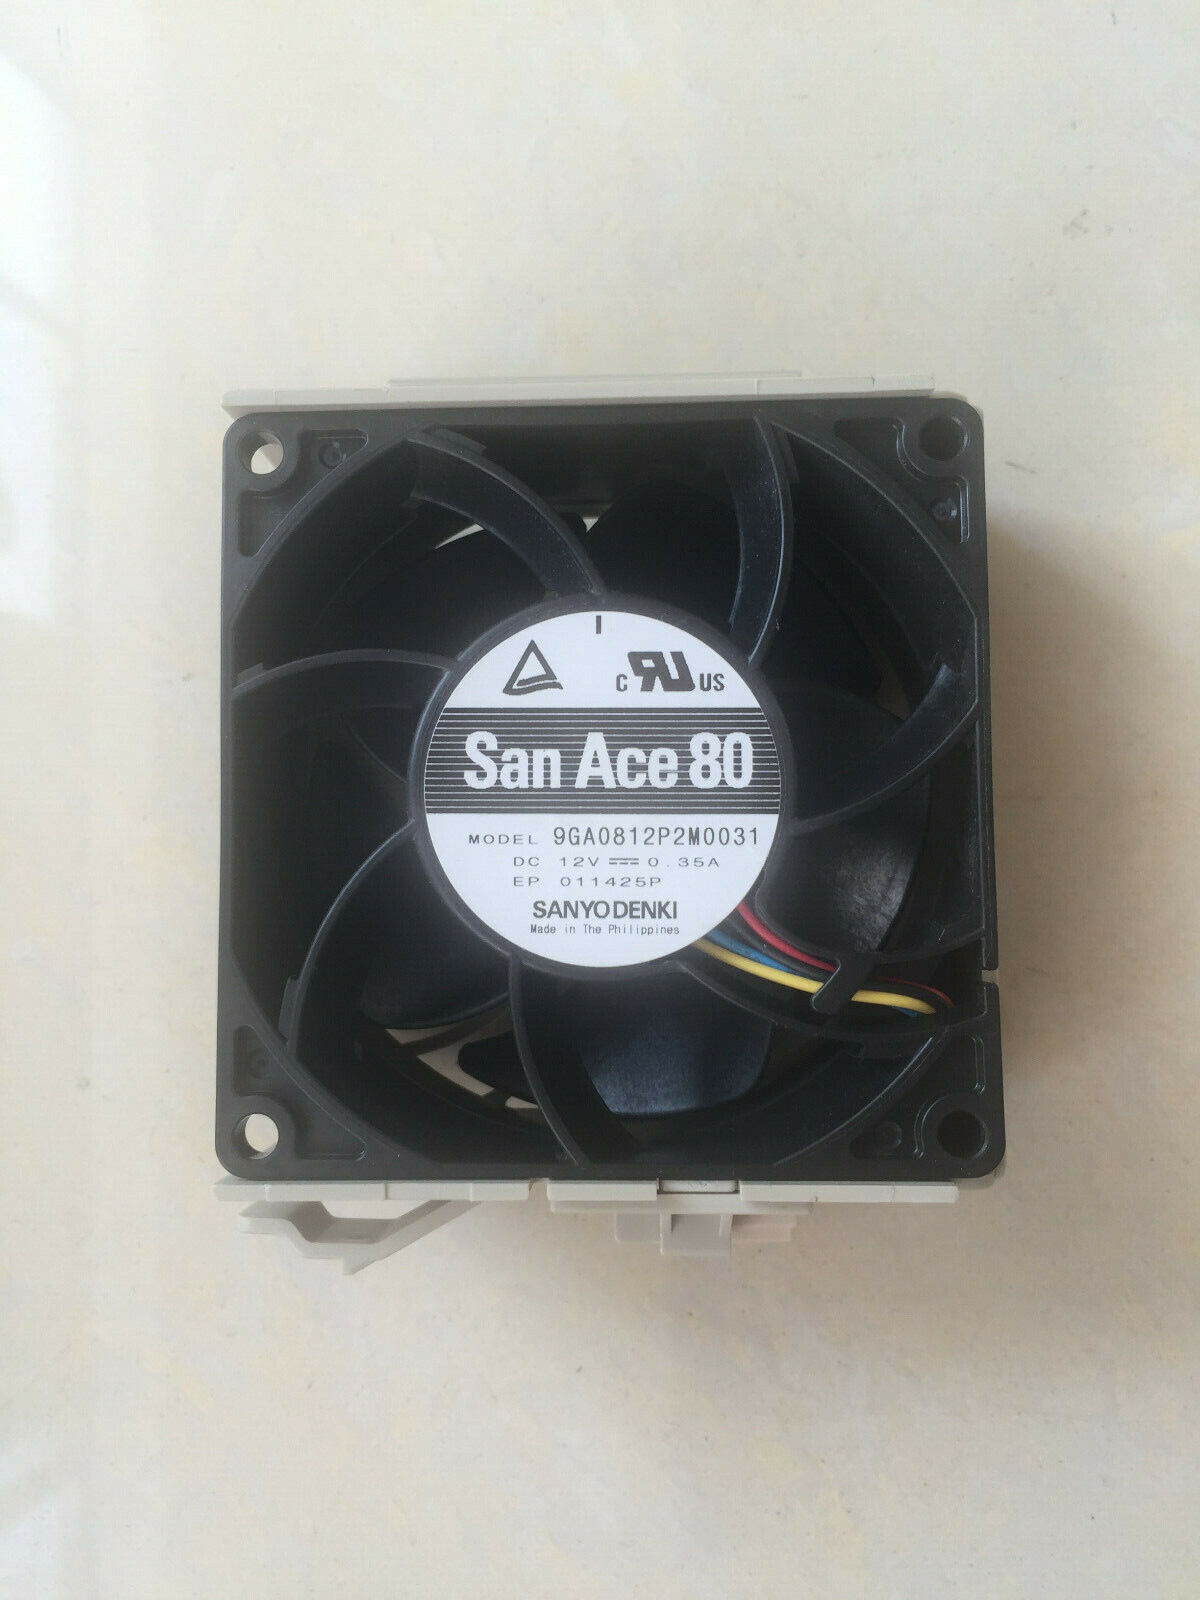 SAN ACE 80 Server Cooling Fan DC 12V 0.35A EP 011425P MODEL:9GA0812P2M0031